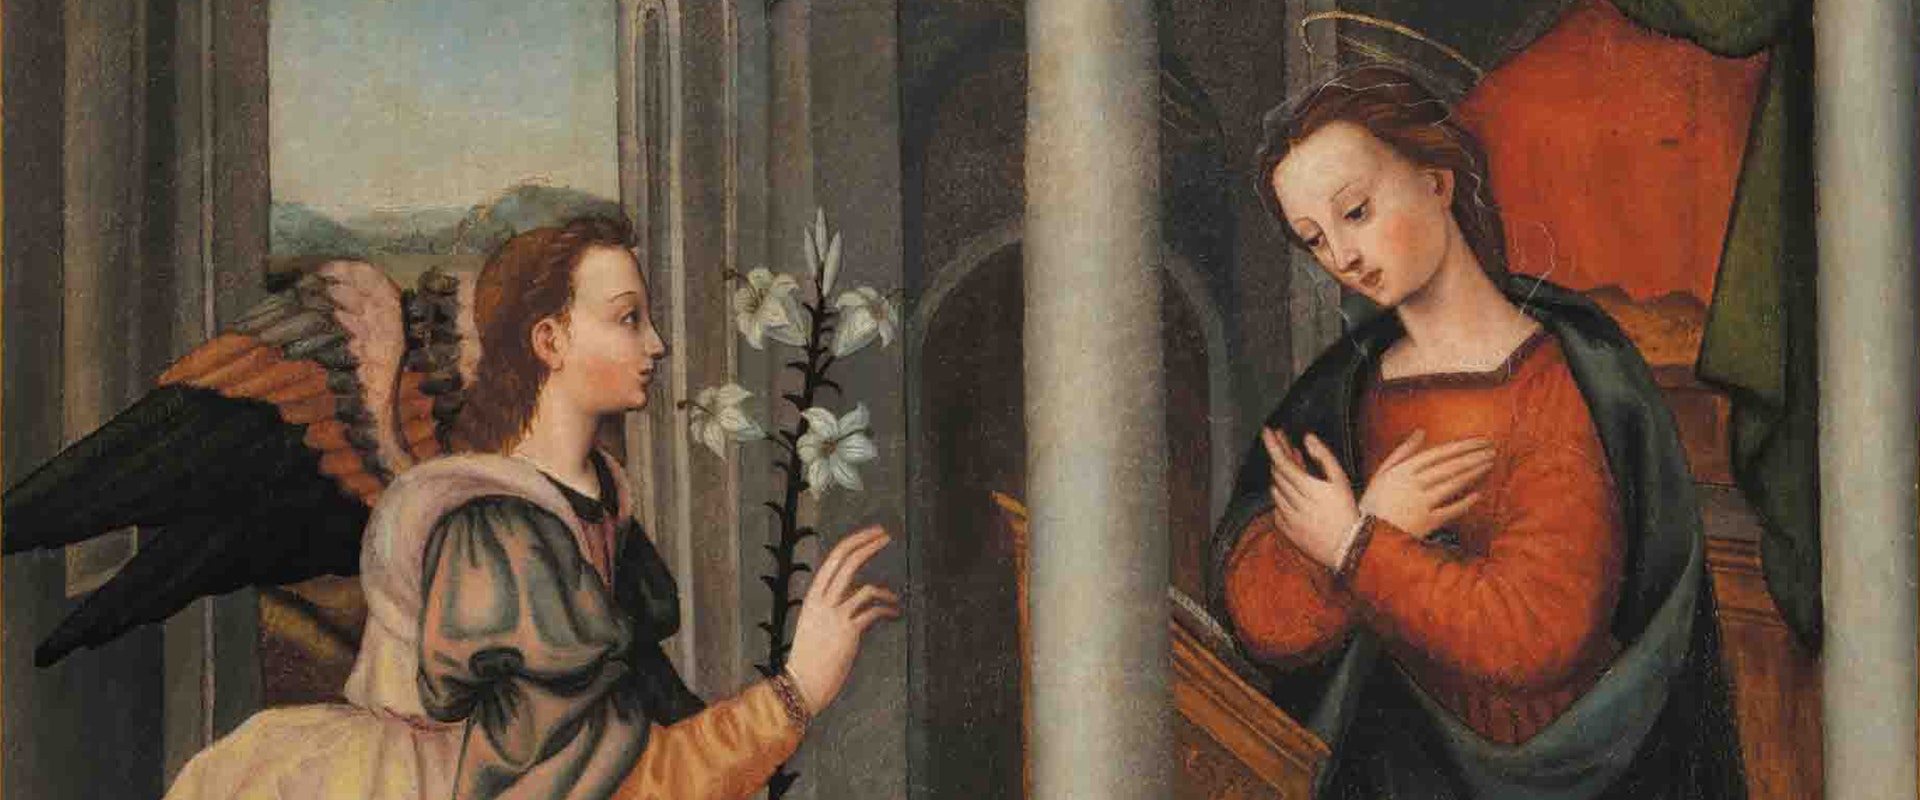 Plautilla Nelli. Art and devotion in the convent in Savonarola's footsteps